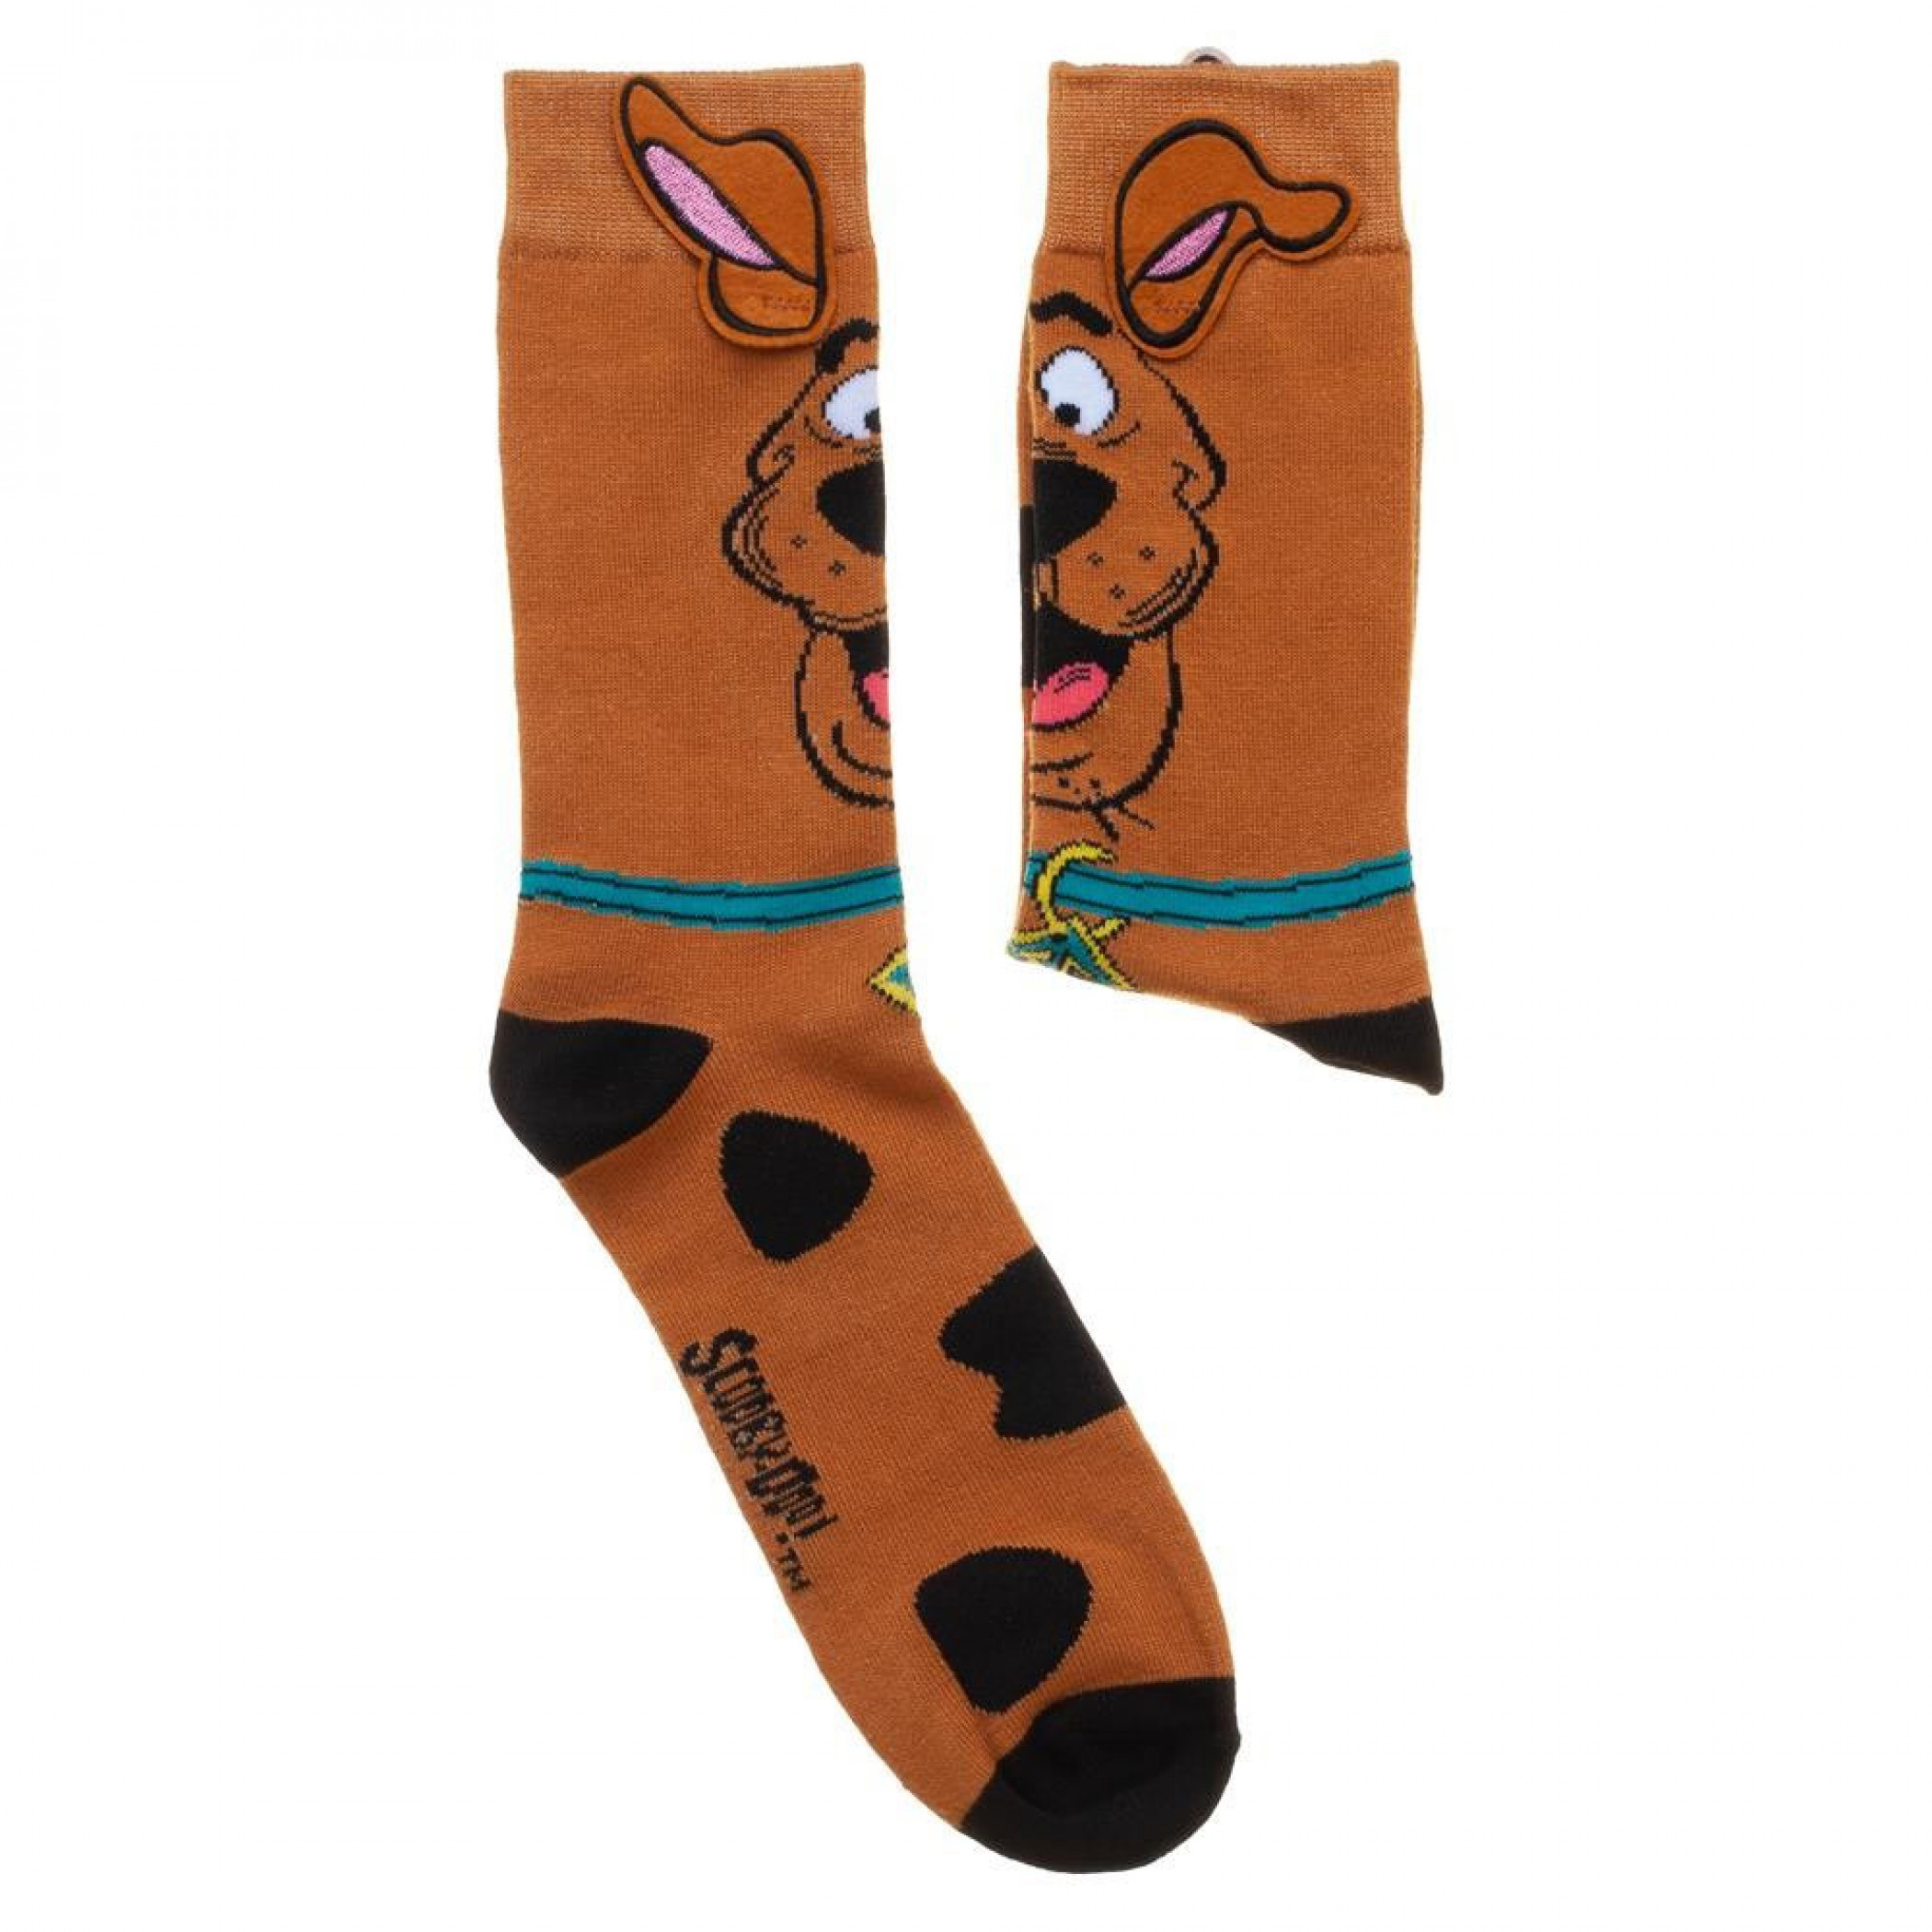 Scooby Doo Novelty Ears Crew Sock